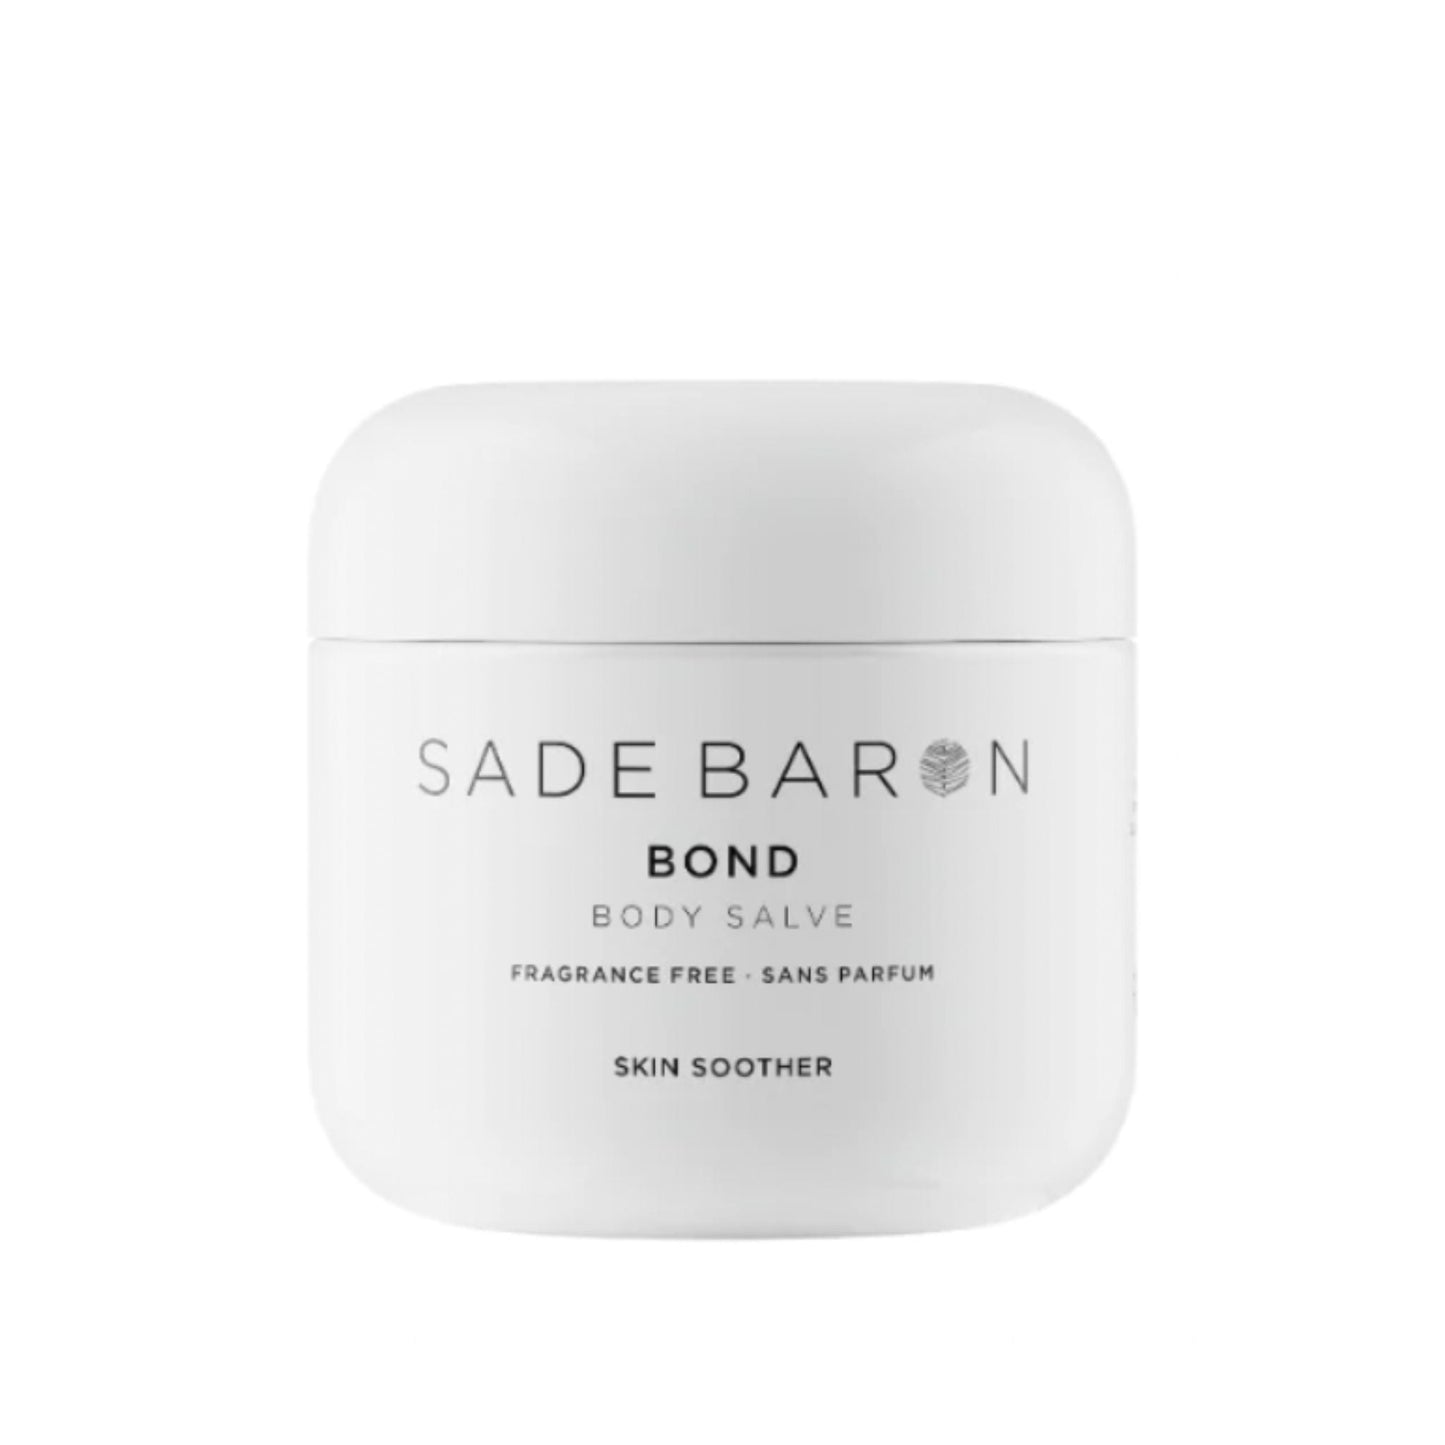 Sade Baron - Sade Baron Bond Salve - ORESTA clean beauty simplified